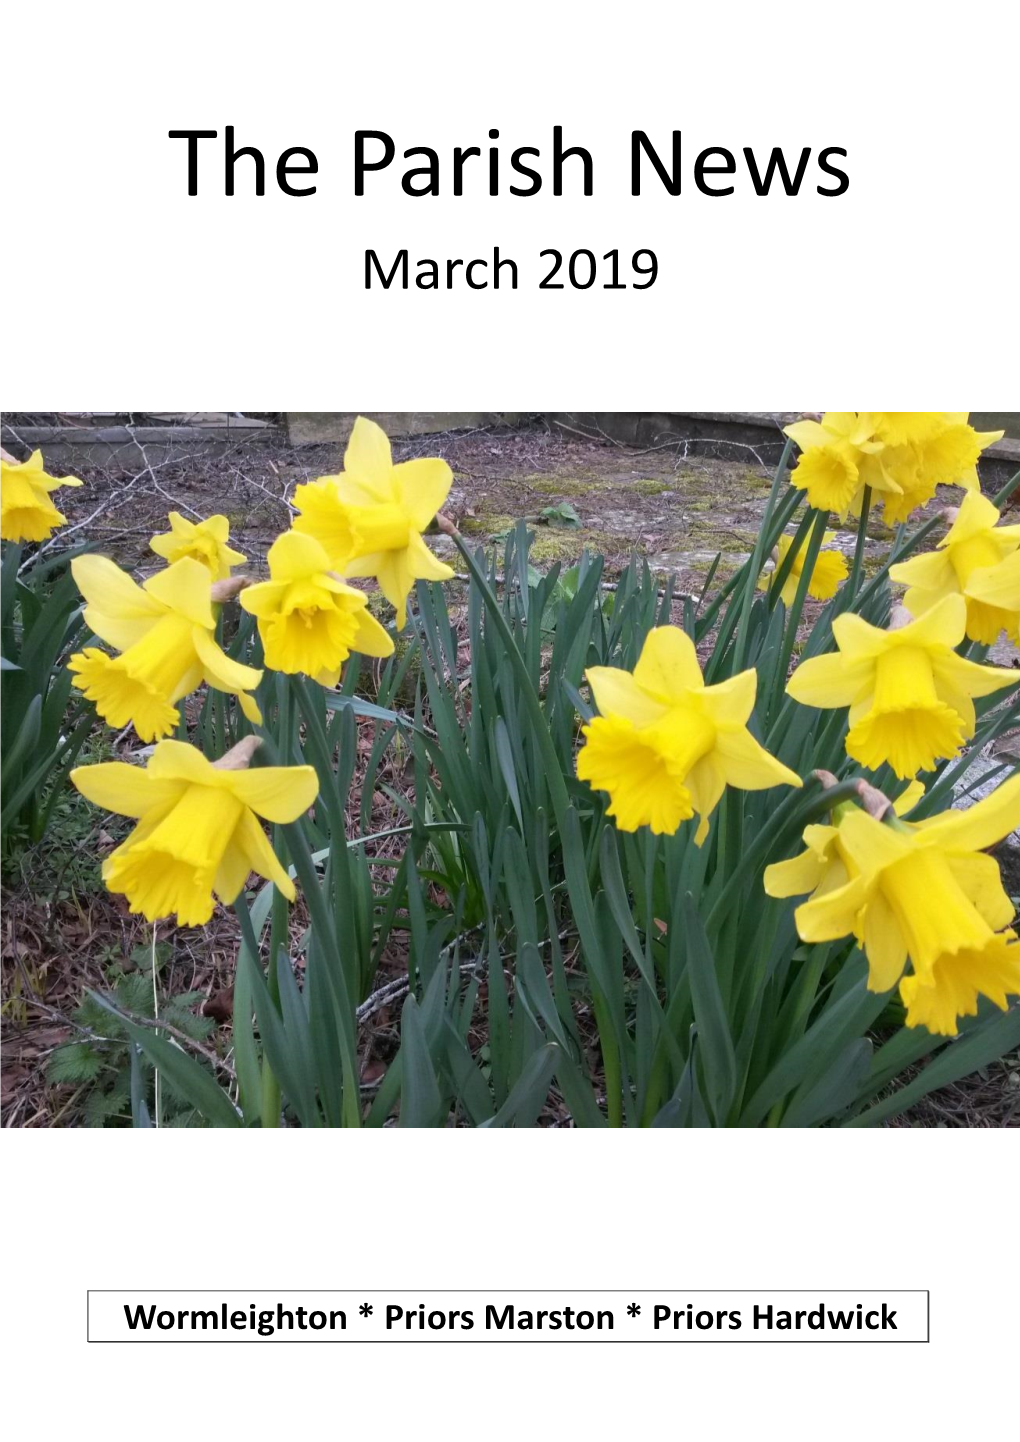 The Parish News March 2019